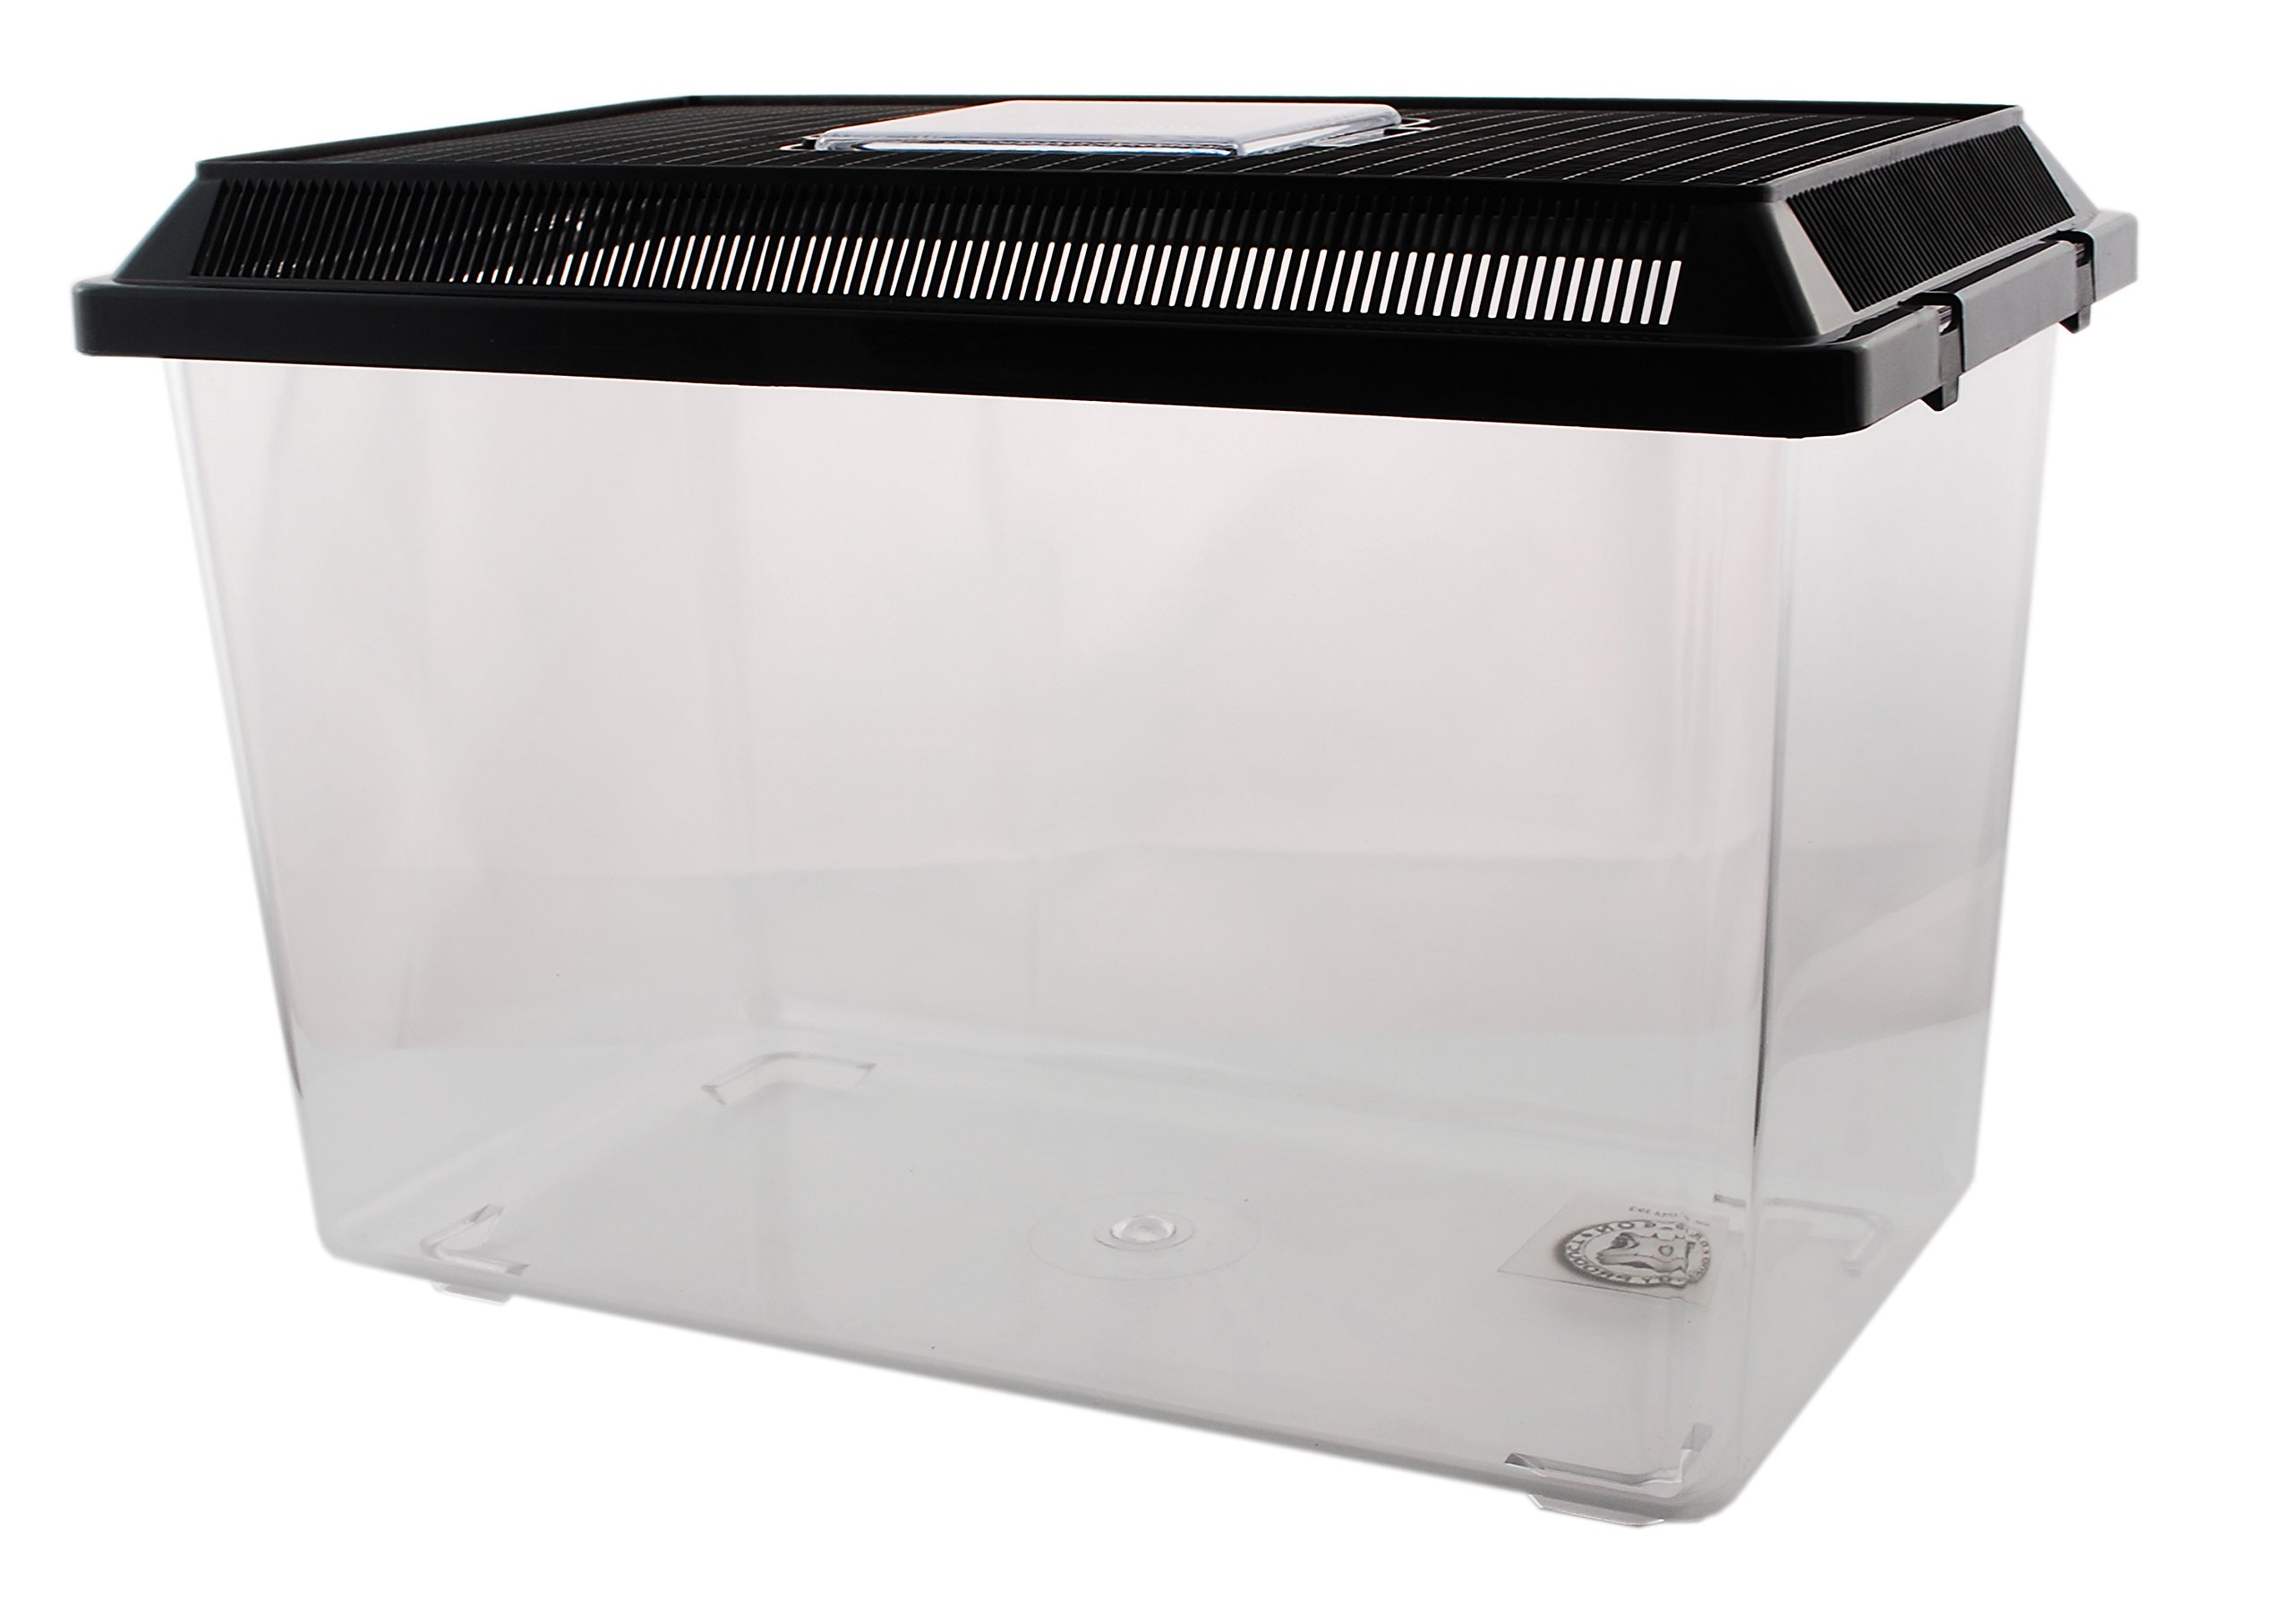 Neu PET-Plaza Kunststoffbox - Faunarium - Kunststoffterrarium - Faunabox - Insektenbox - Insektenterrarium - Box für Futterinsekten (37 x 22 x 25,5cm)